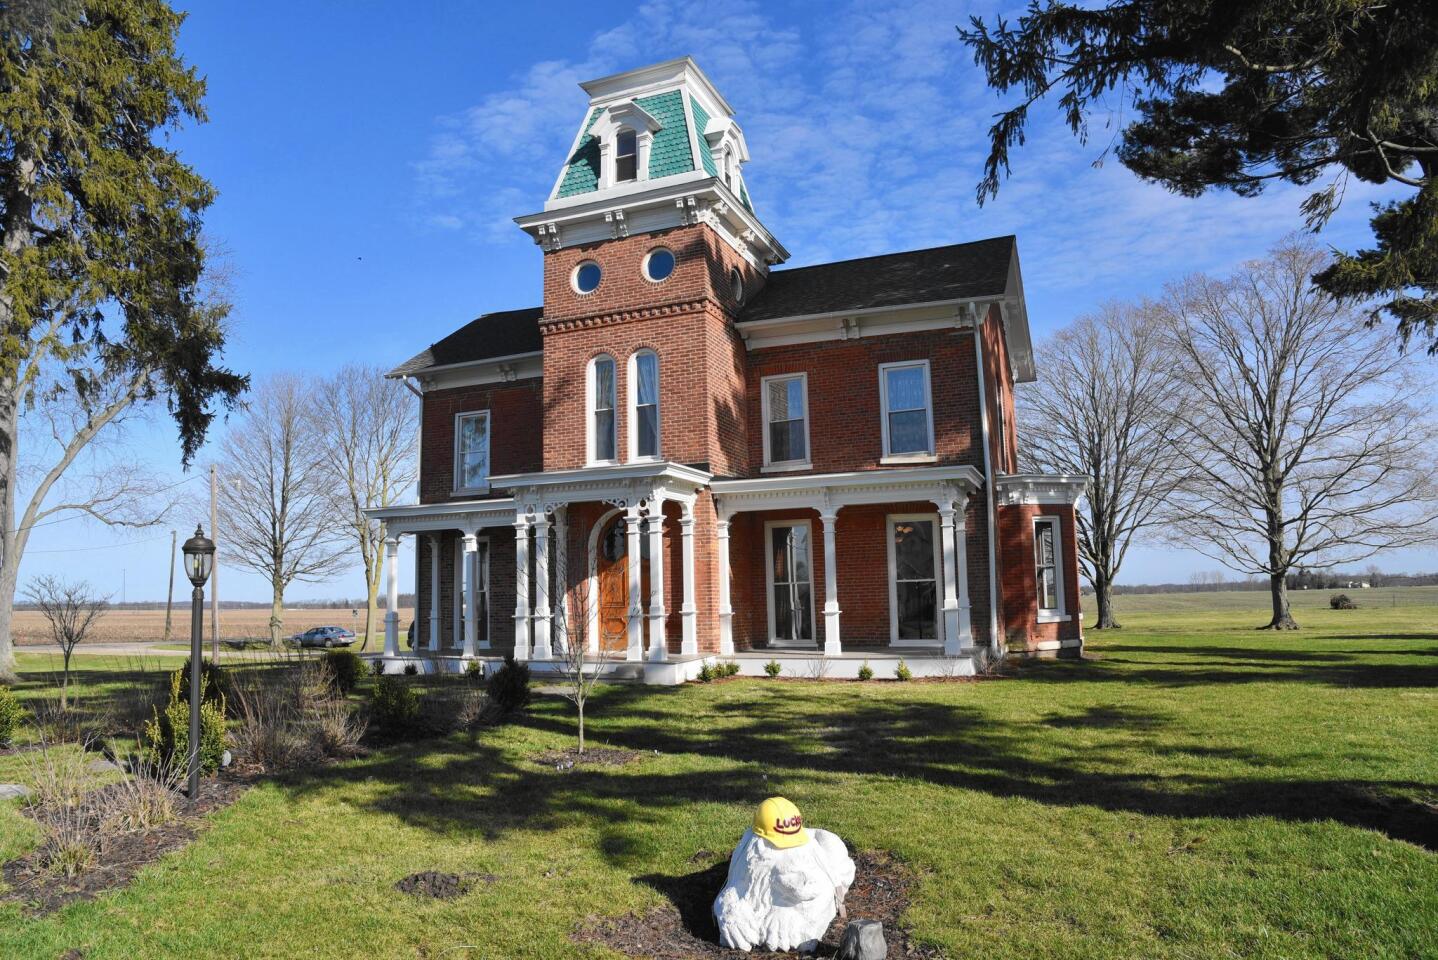 The restored home of Underground Railroad station master James E. Bonine in Vandalia, Mich.